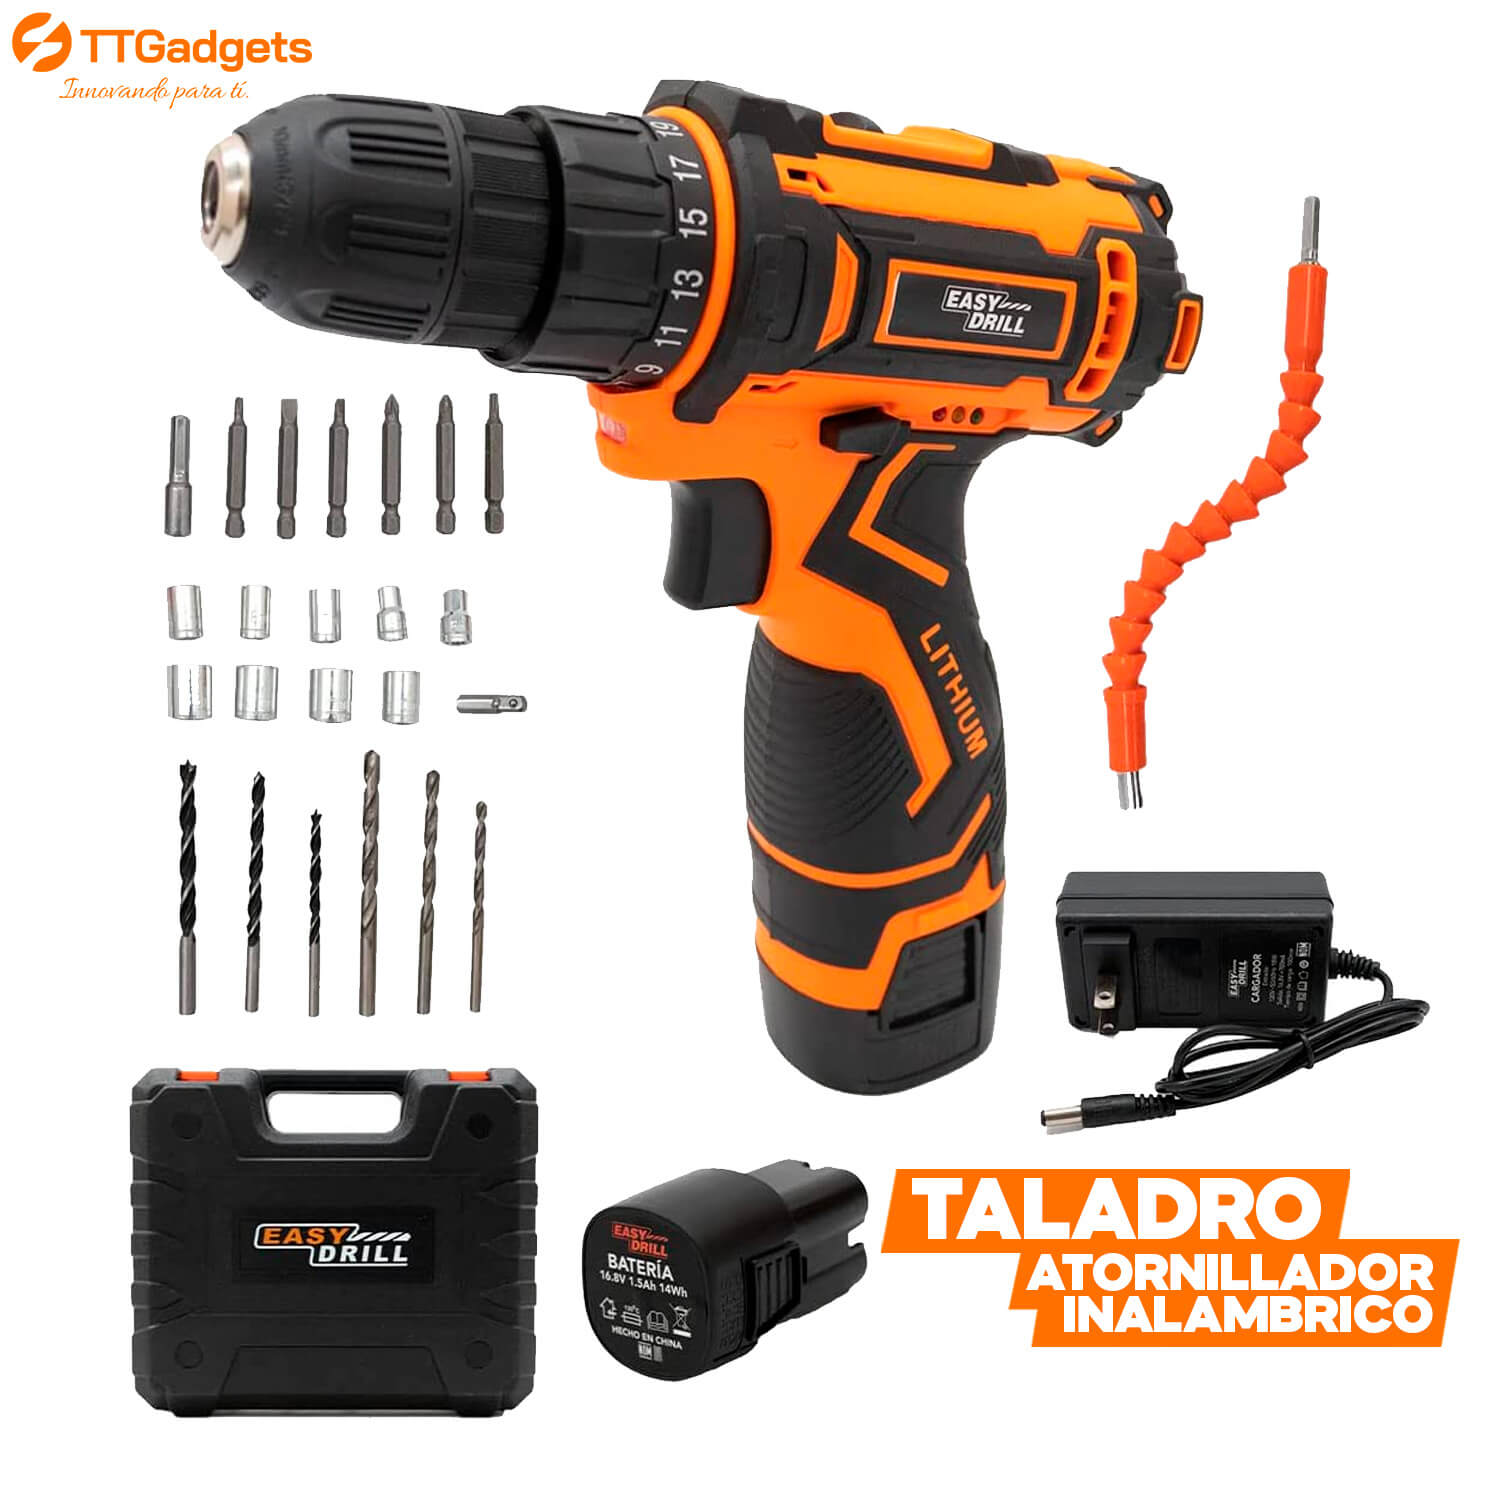 Kit de Taladro Inalámbrico con Batería Recargable: Potente Herramienta para Atornillar y Perforar - Kit de Accesorios Incluidos | 30 días garantía